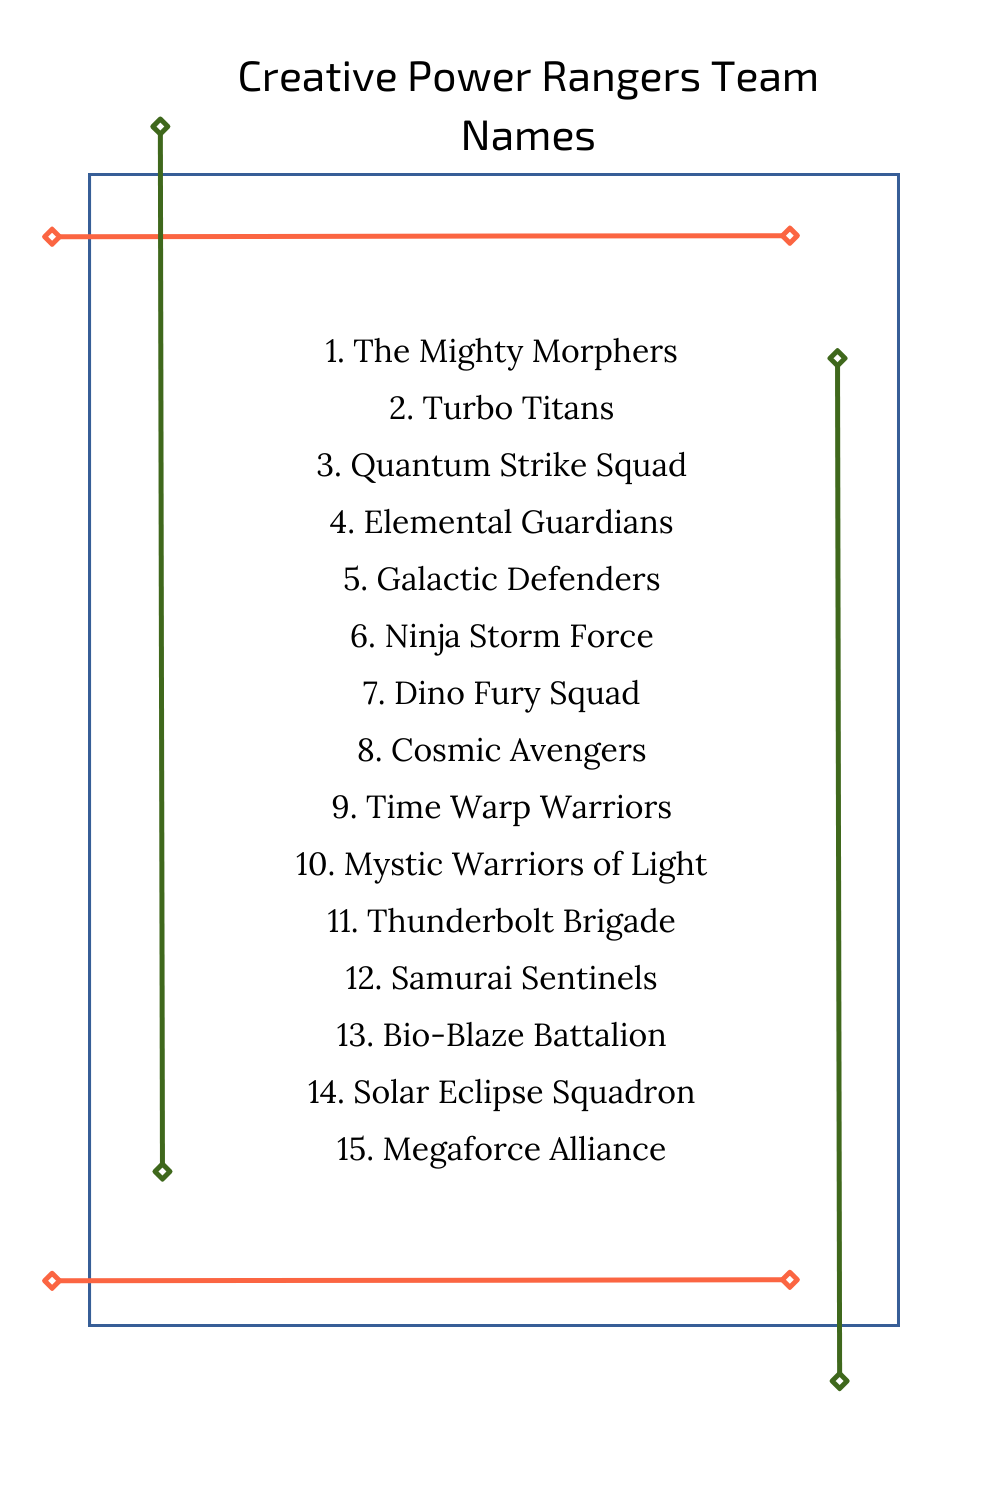 Creative Power Rangers Team Names